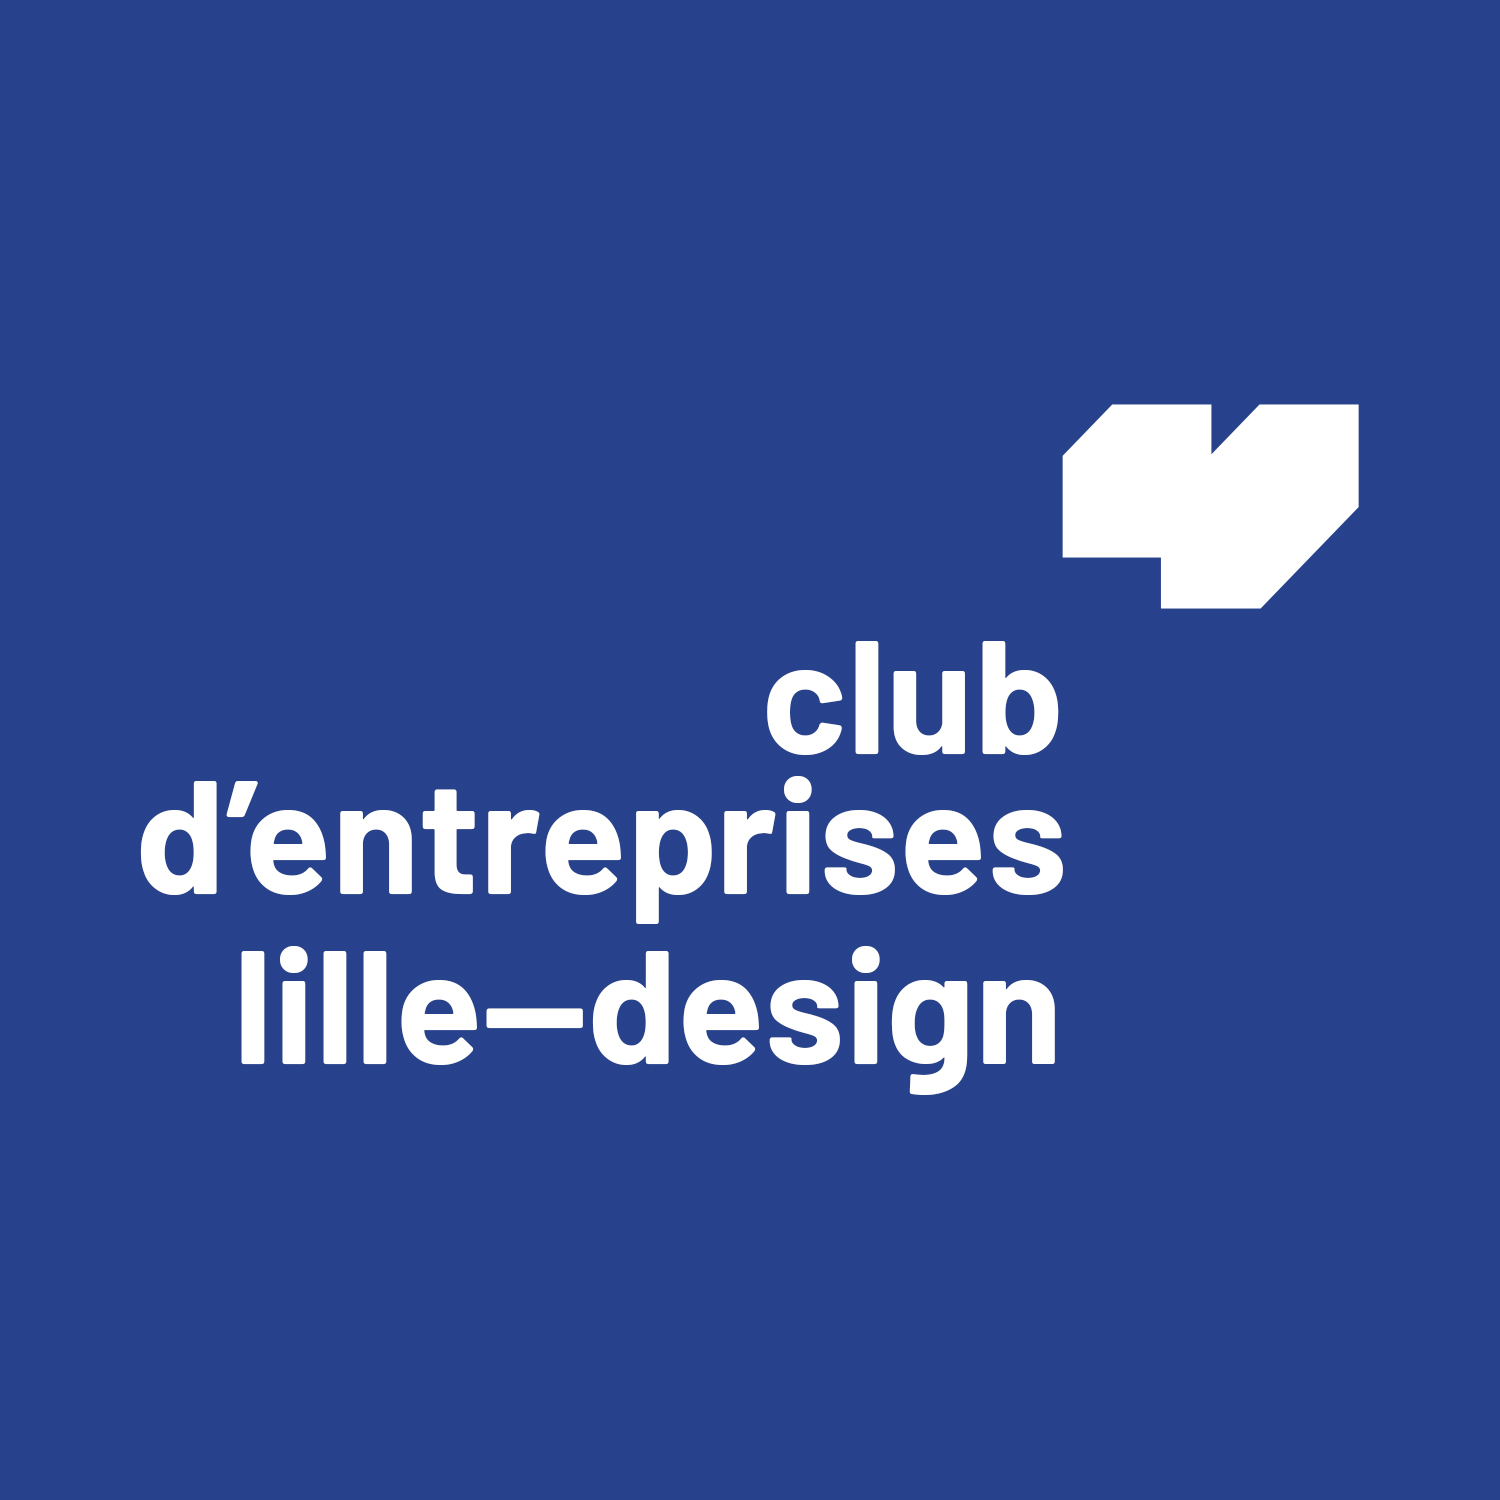 club entreprises lille—design